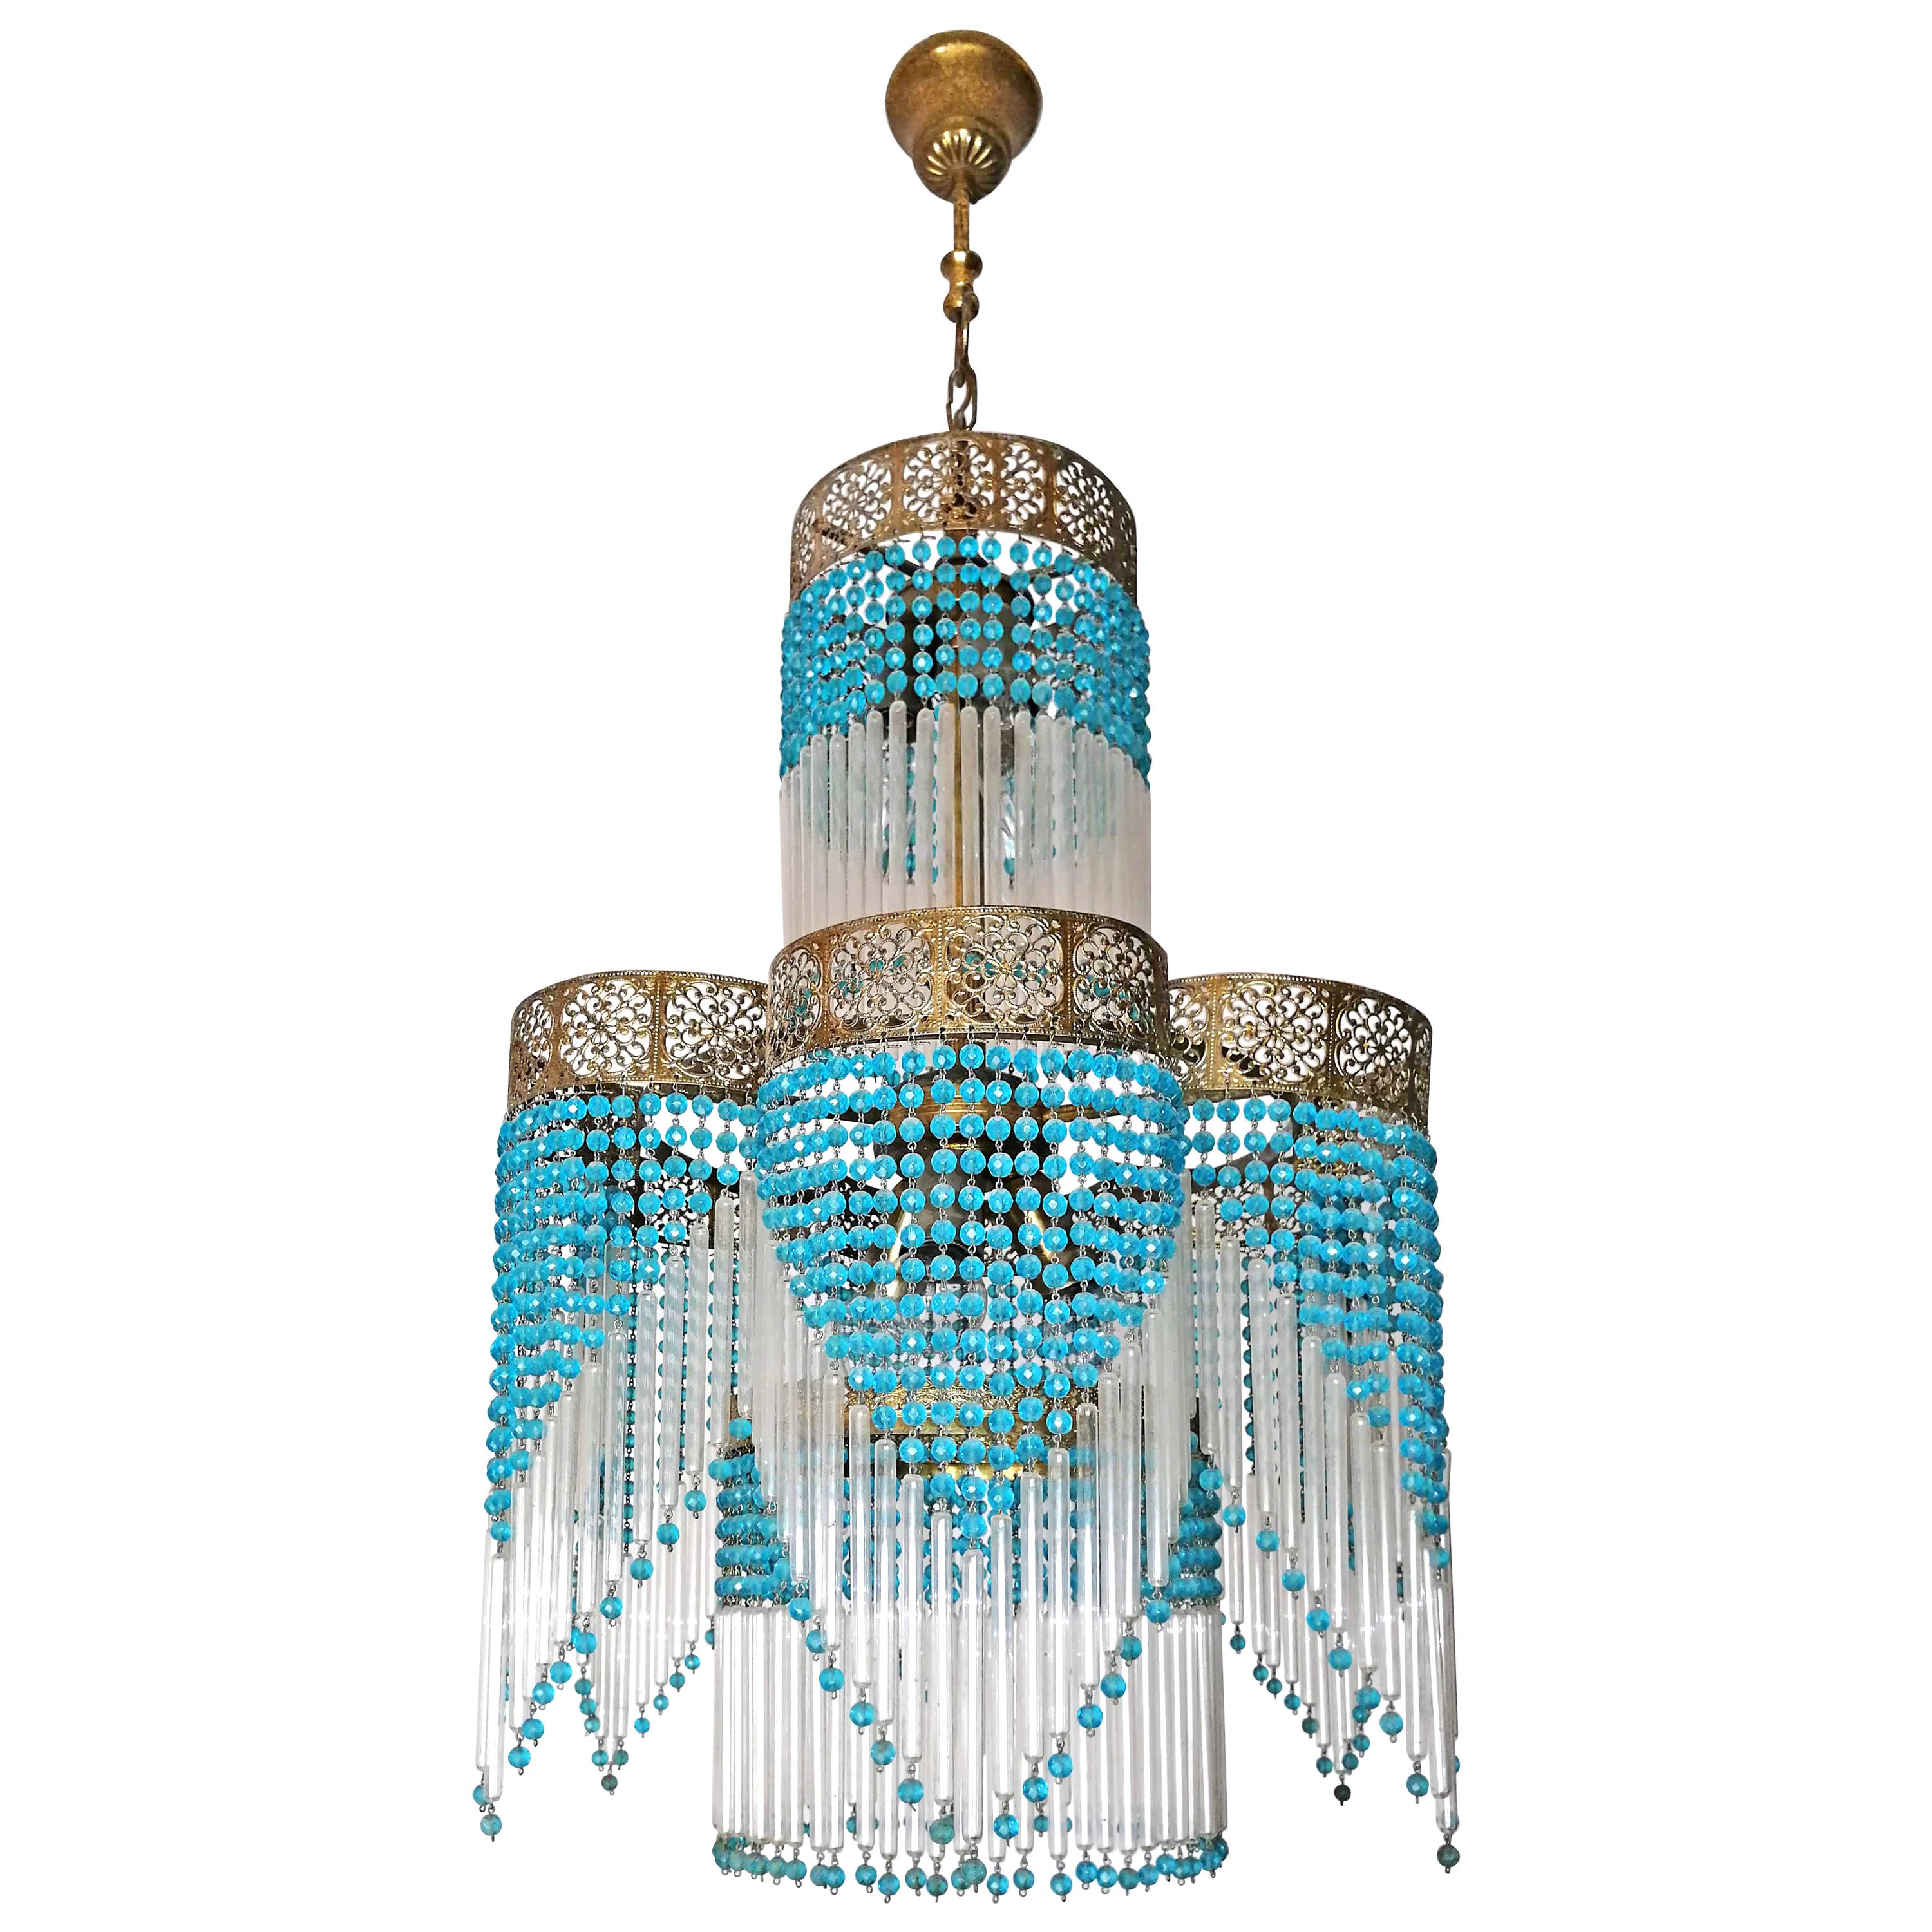 Art Deco Art Nouveau Blue Beads Glass Fringe Hollywood Regency Gilt Chandelier